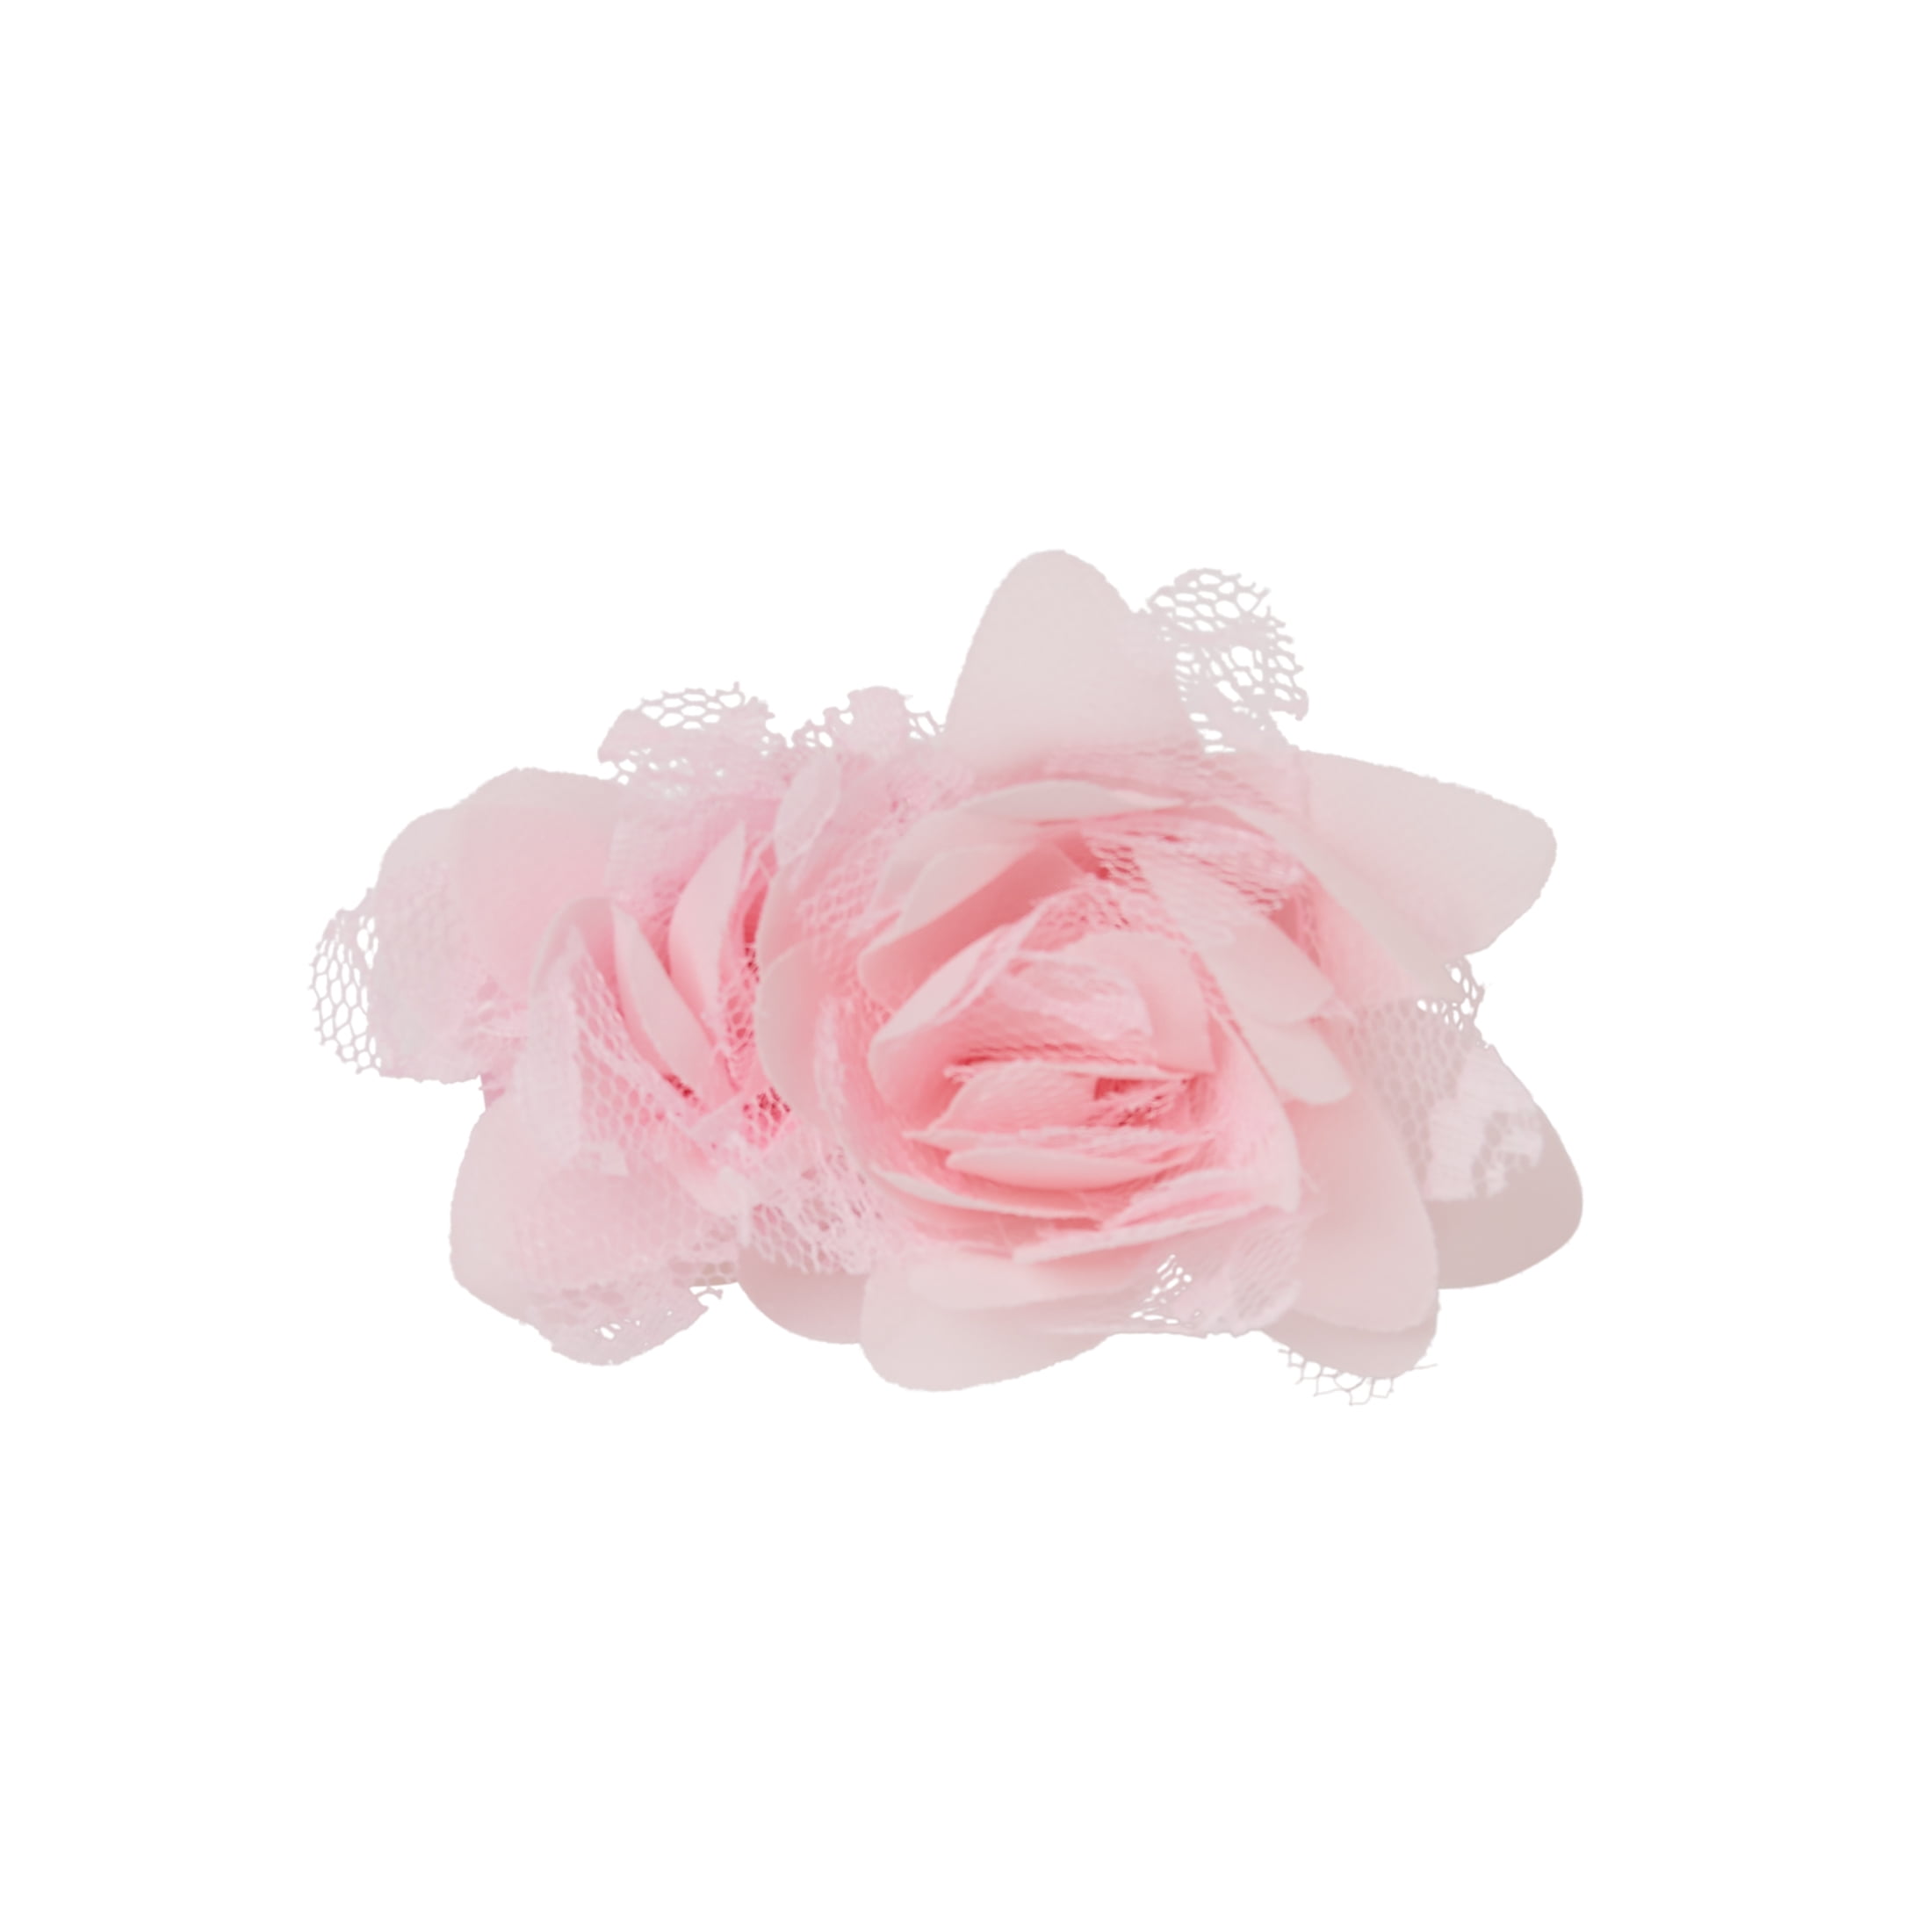 Rose Pink CHIFFON ROSETTE Frayed Mesh LACE TRIM Edging Craft 1y 15 Large Flowers 